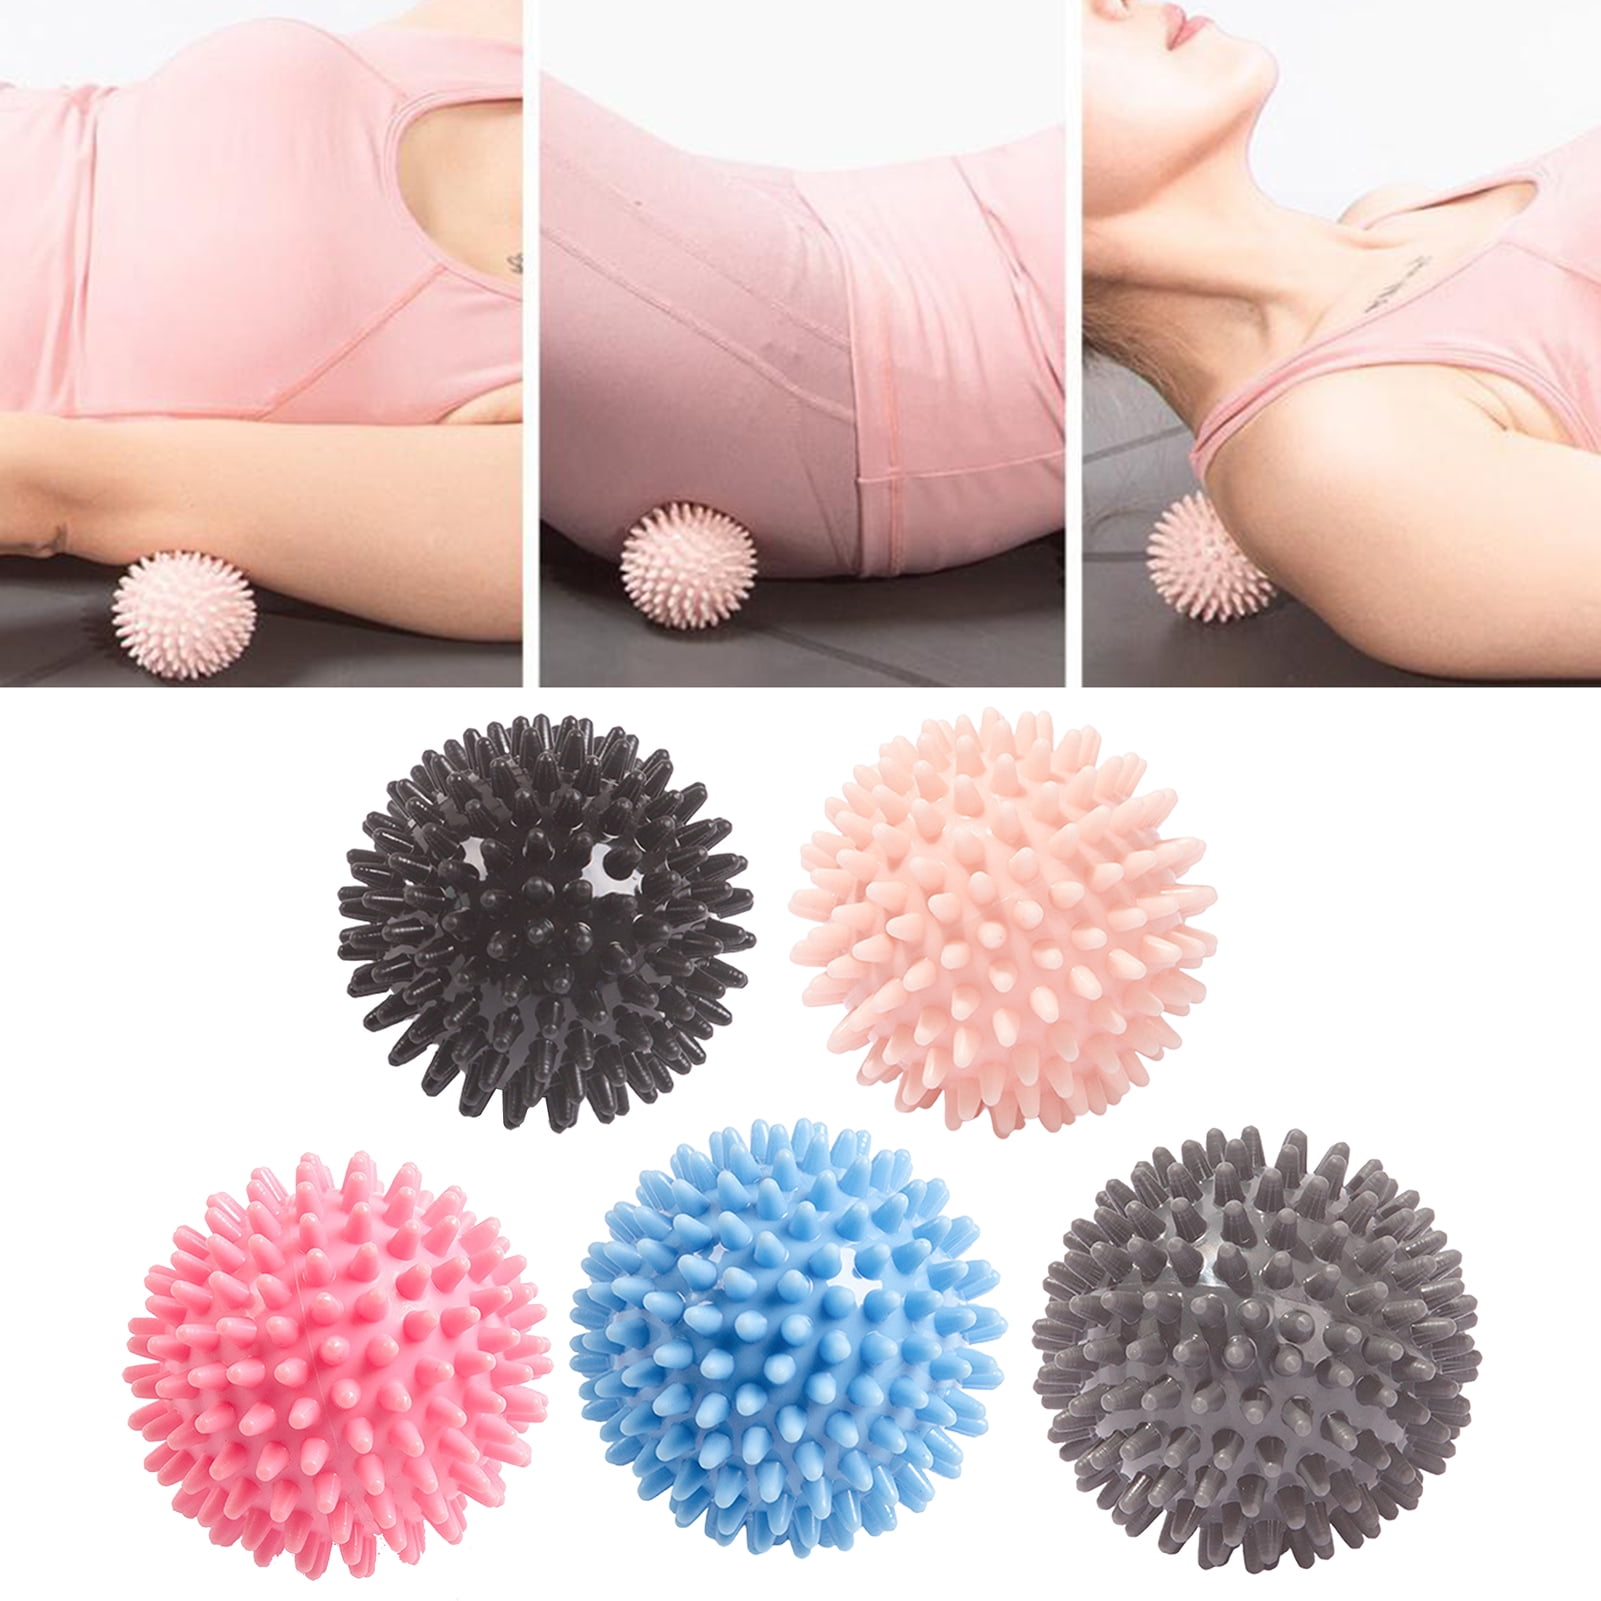 Soft Spiky Trigger Point Deep Tissue Massage Ball for Palm Back Hand Leg 